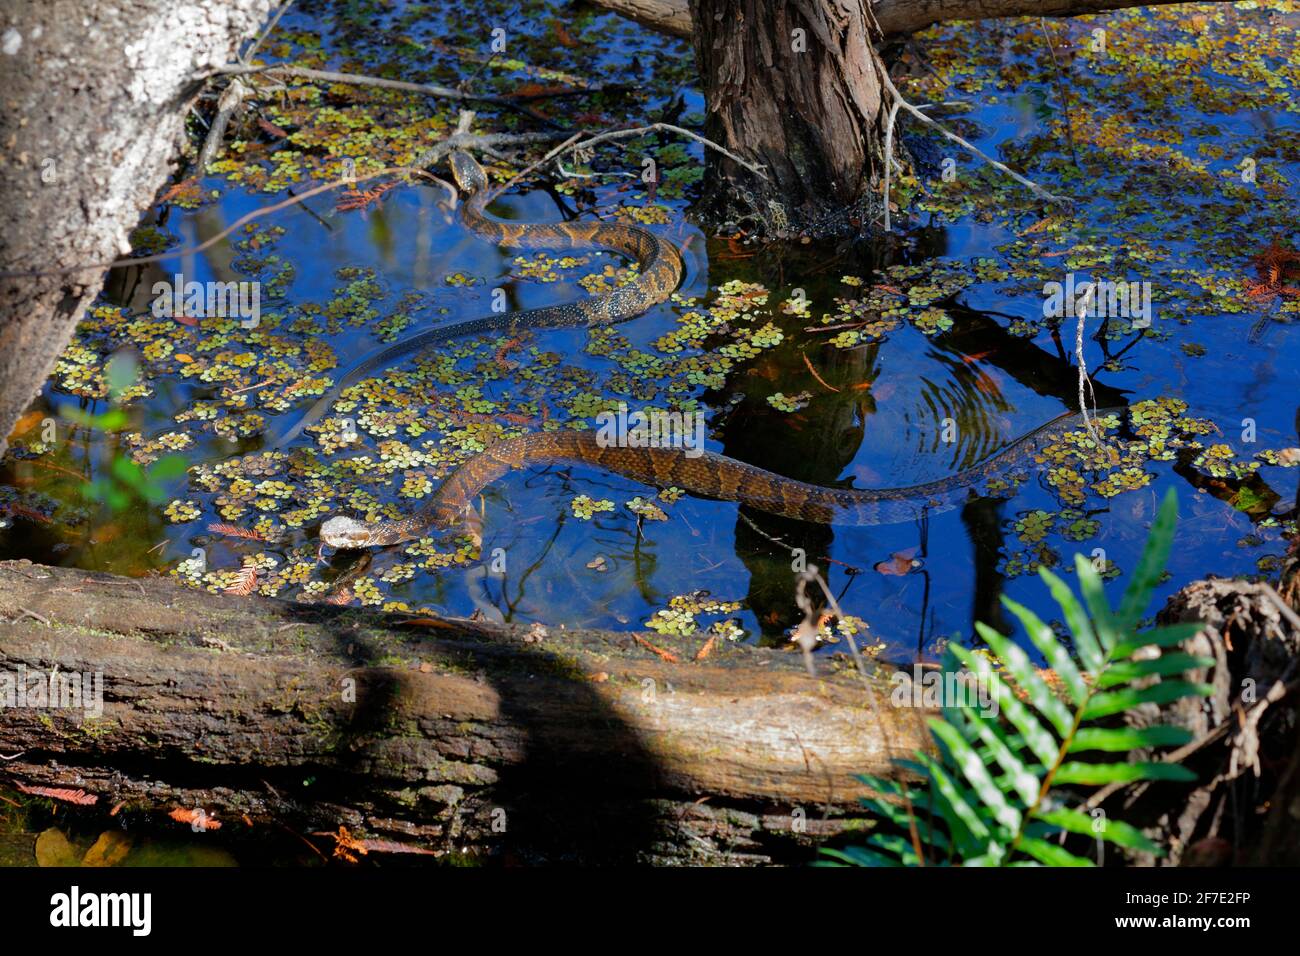 Florida Cottonmouths, Agkistrodon piscivorus conanti, foraging in a swamp. Stock Photo